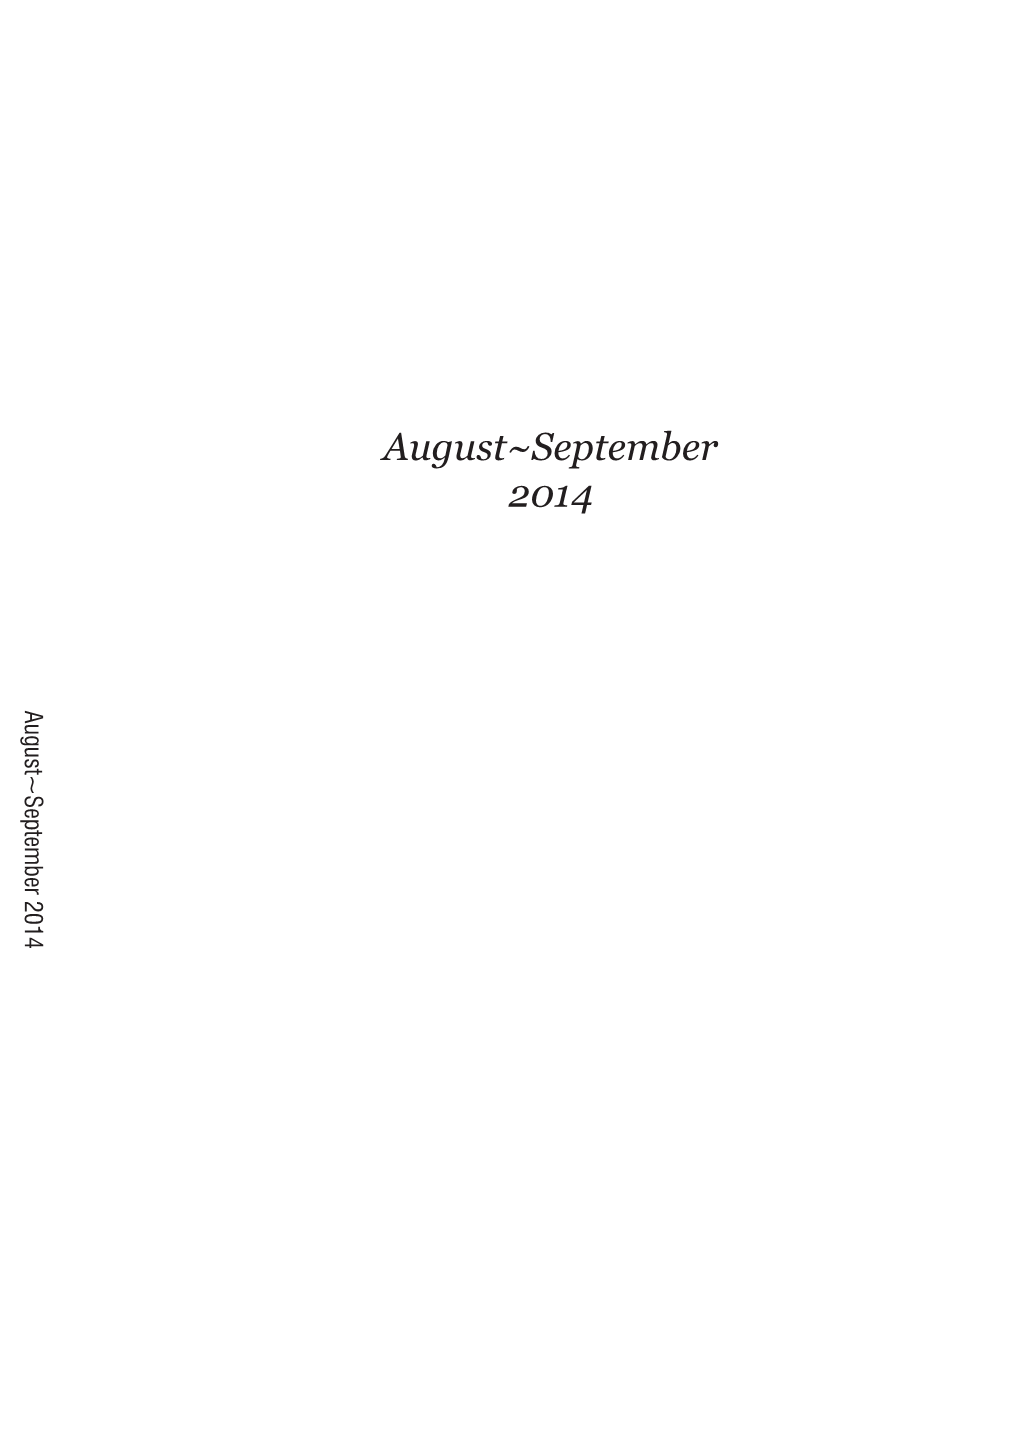 August~September 2014 August~September 2014 National Executive